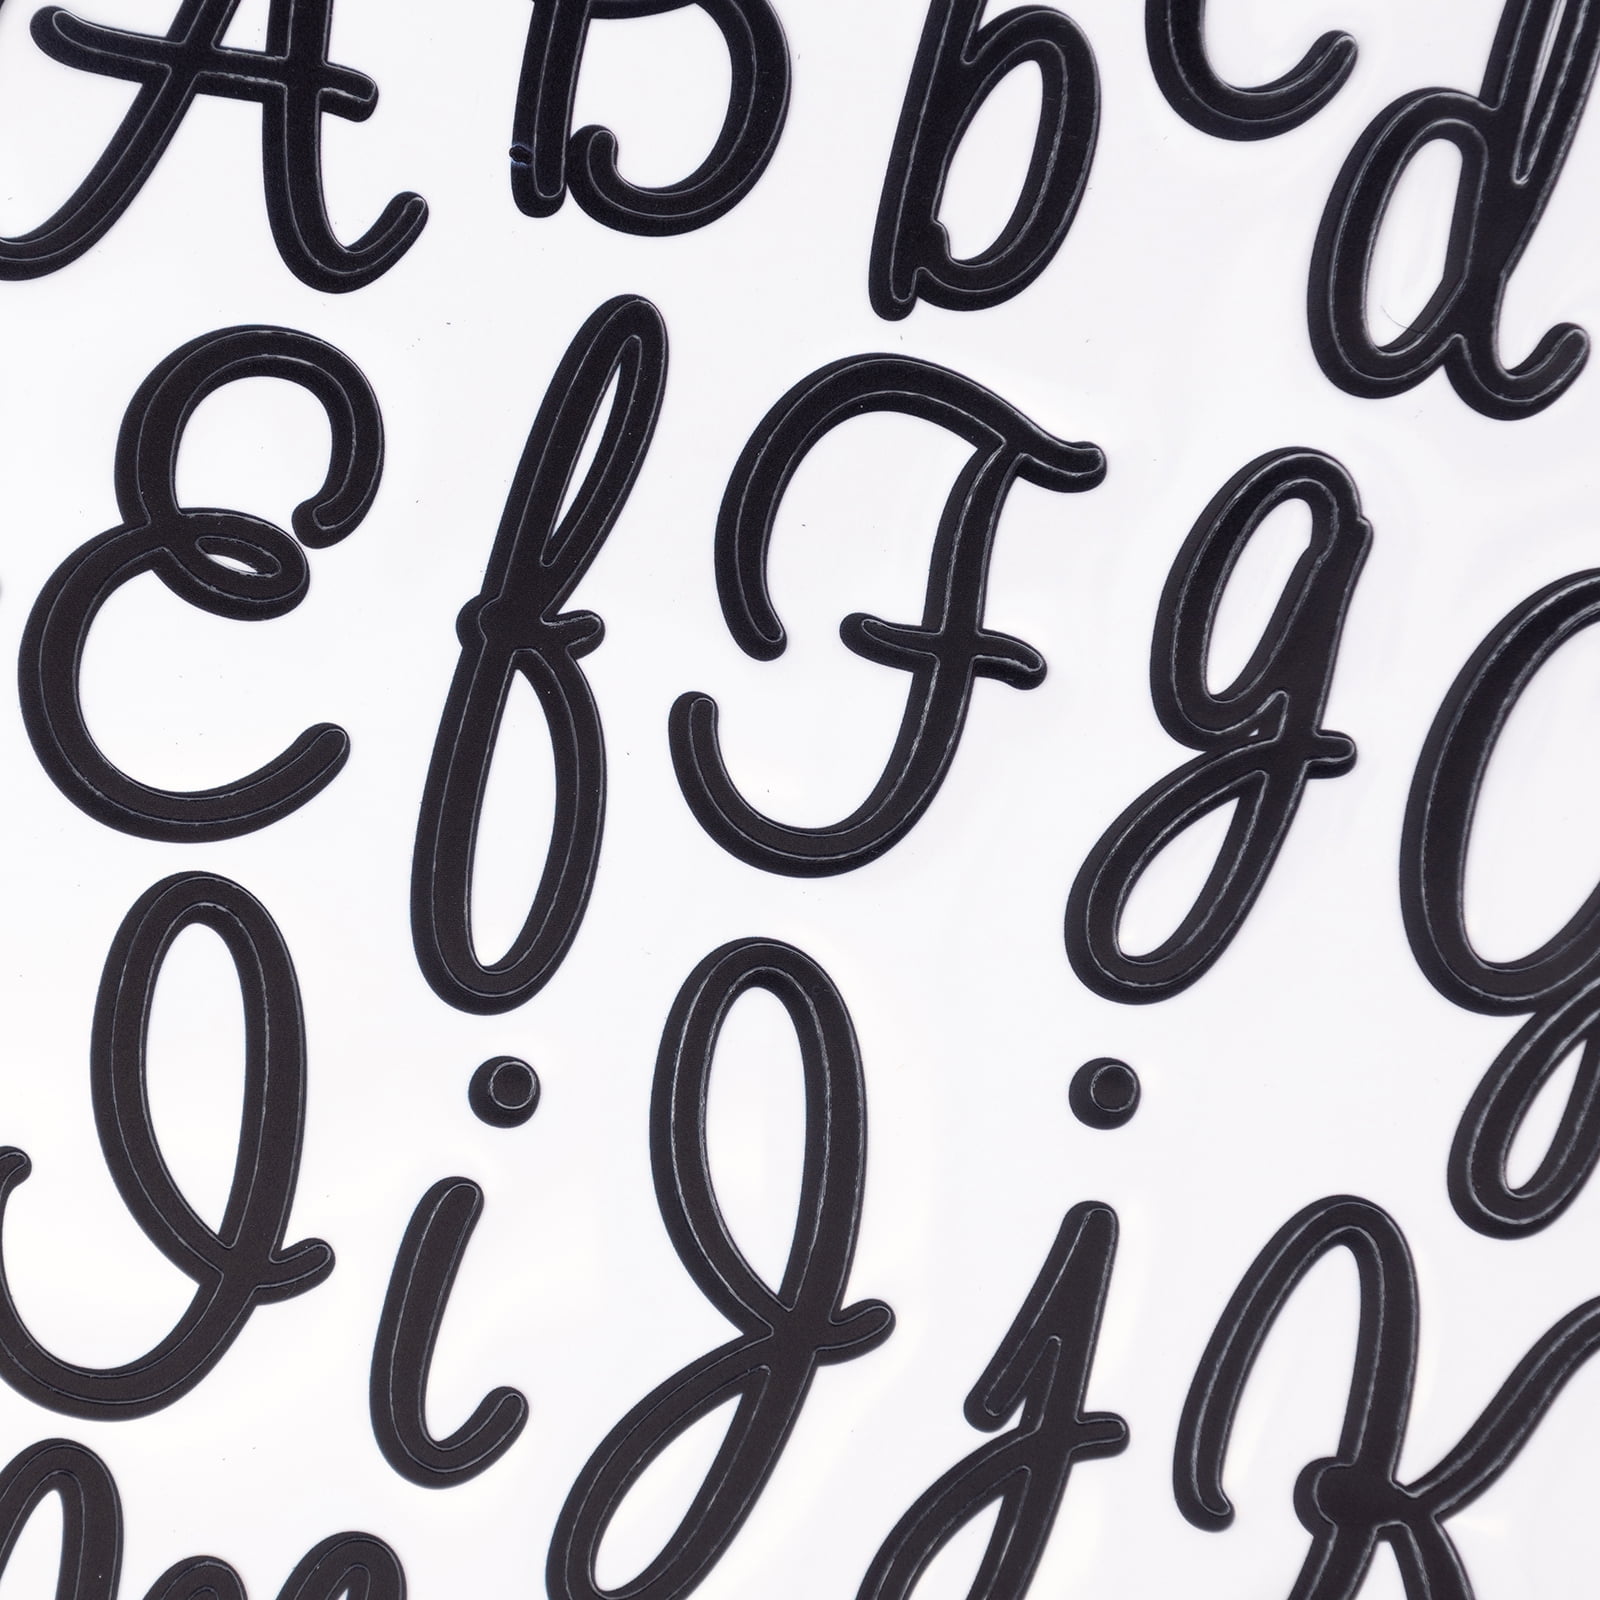 Glitter Script Alphabet Stickers, Hobby Lobby